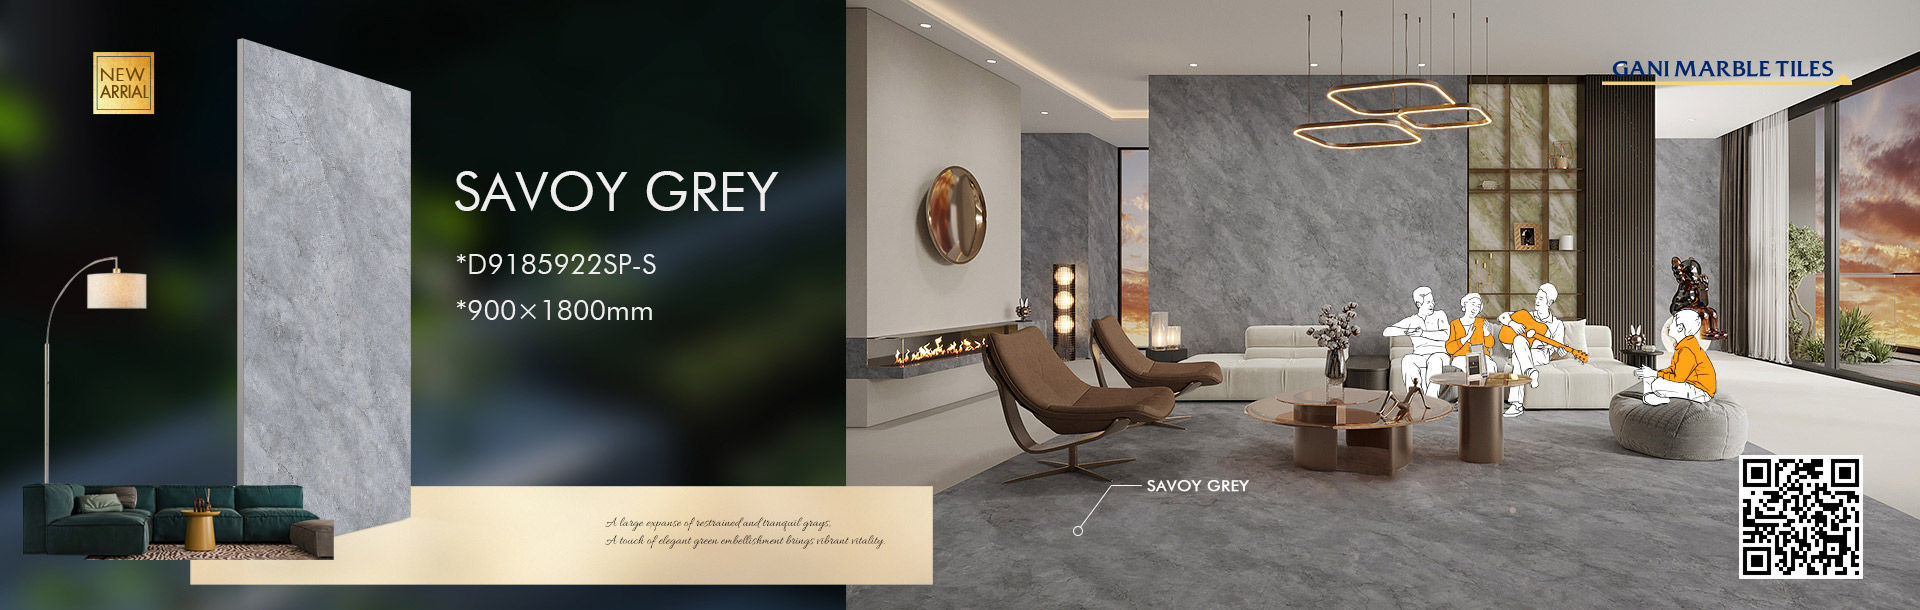 New Arrival - Savoy Grey